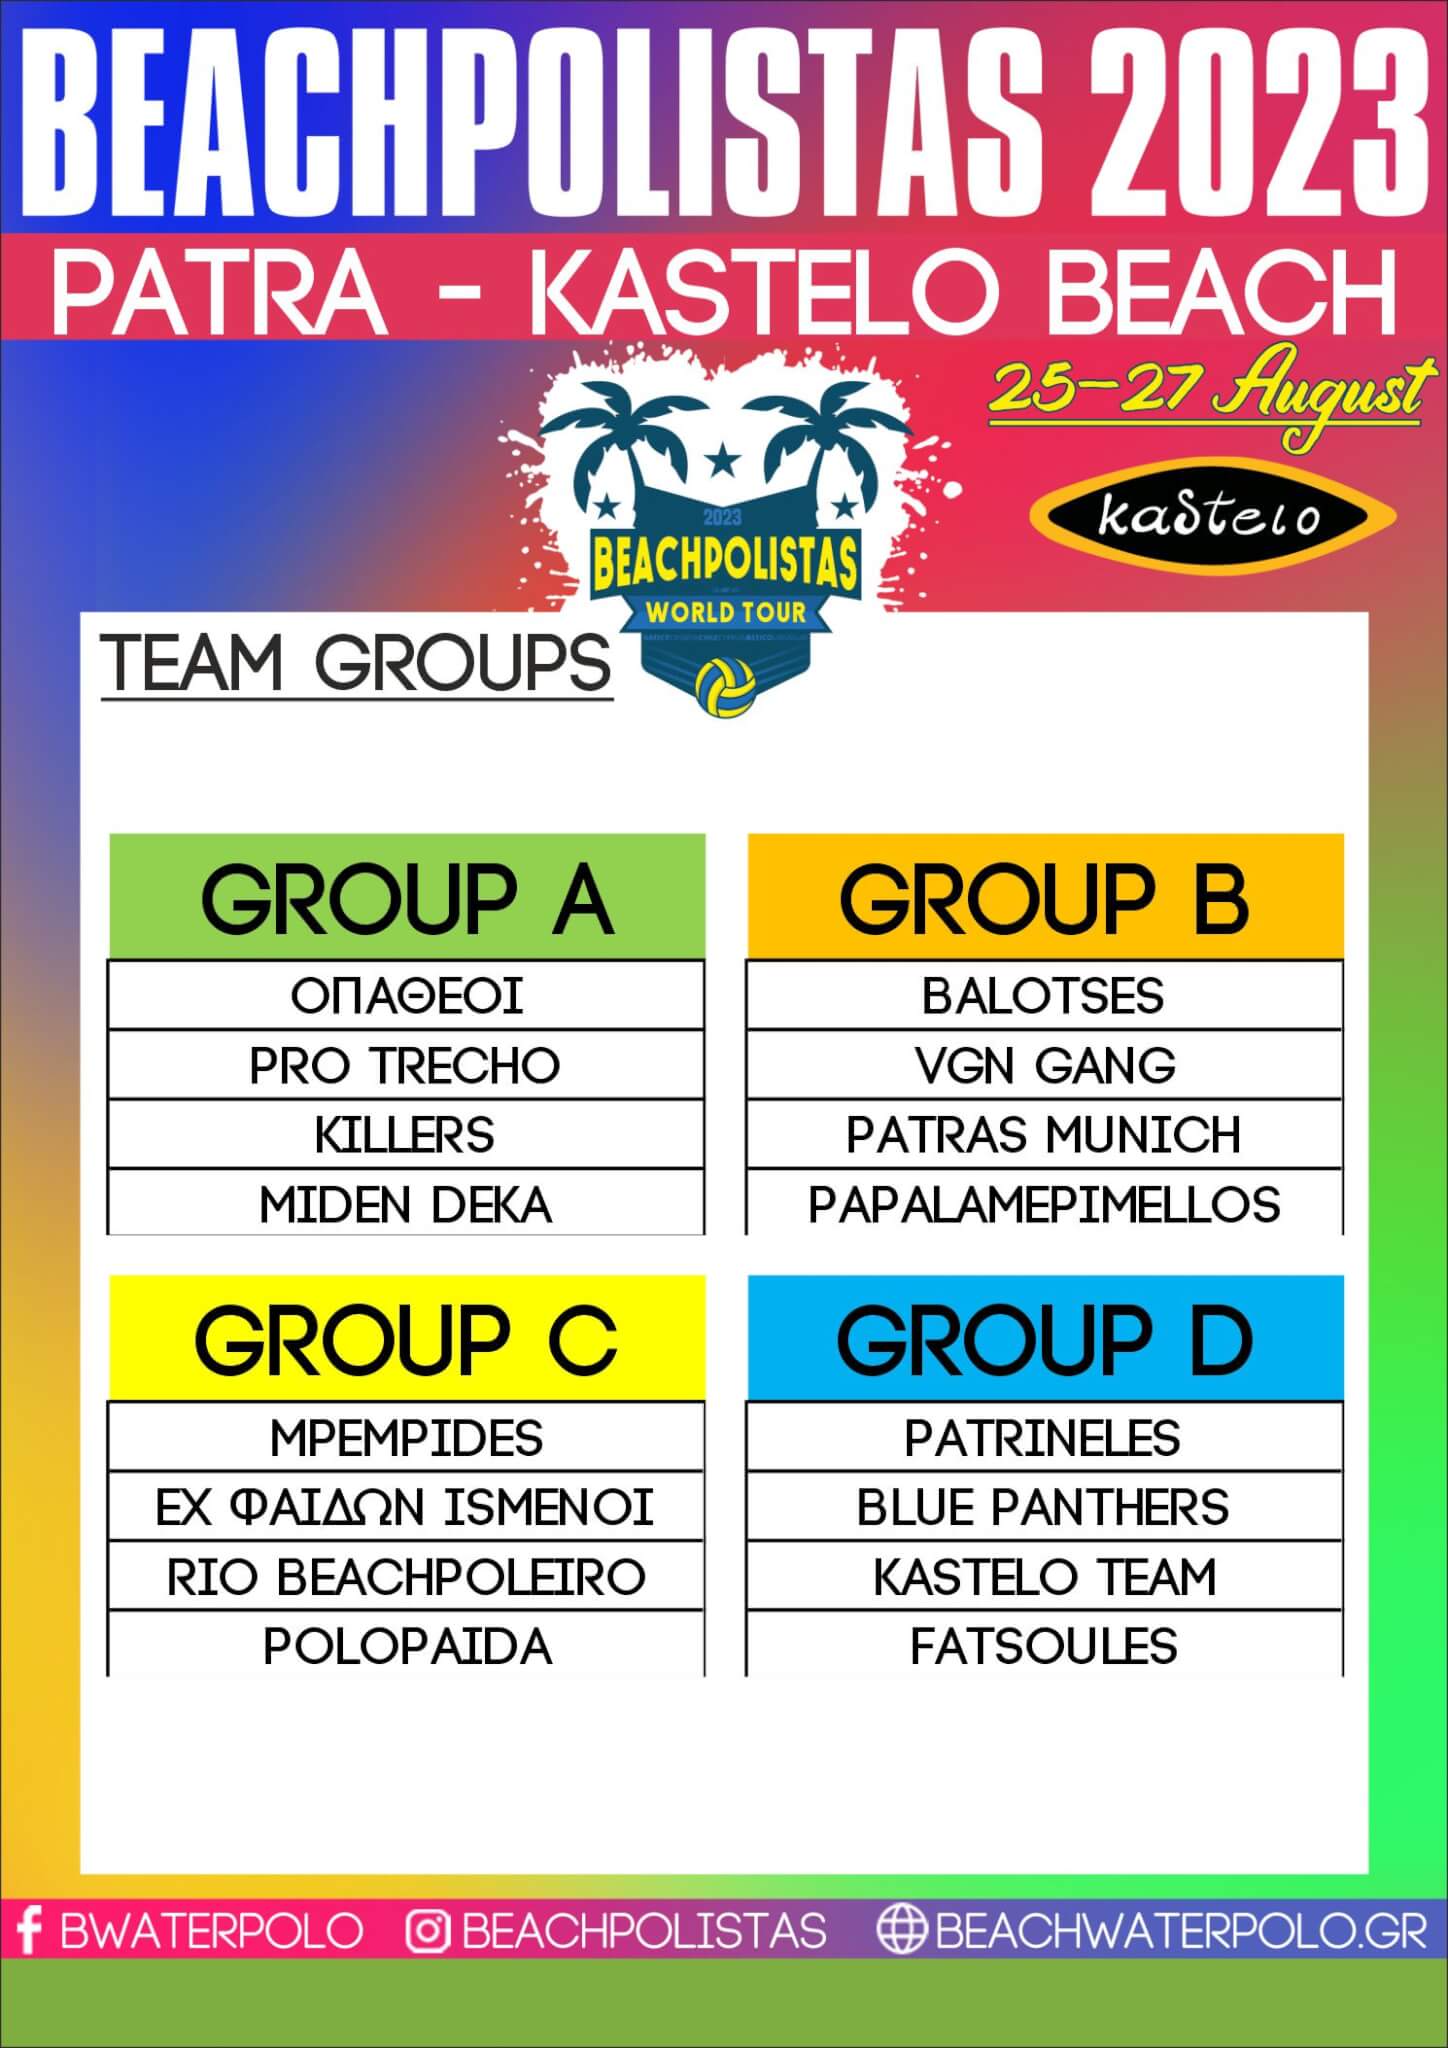 #Beachpolistas World Tour 2023 – Patras Edition: Έρχονται μεγάλες μάχες 25-27 Αυγούστου